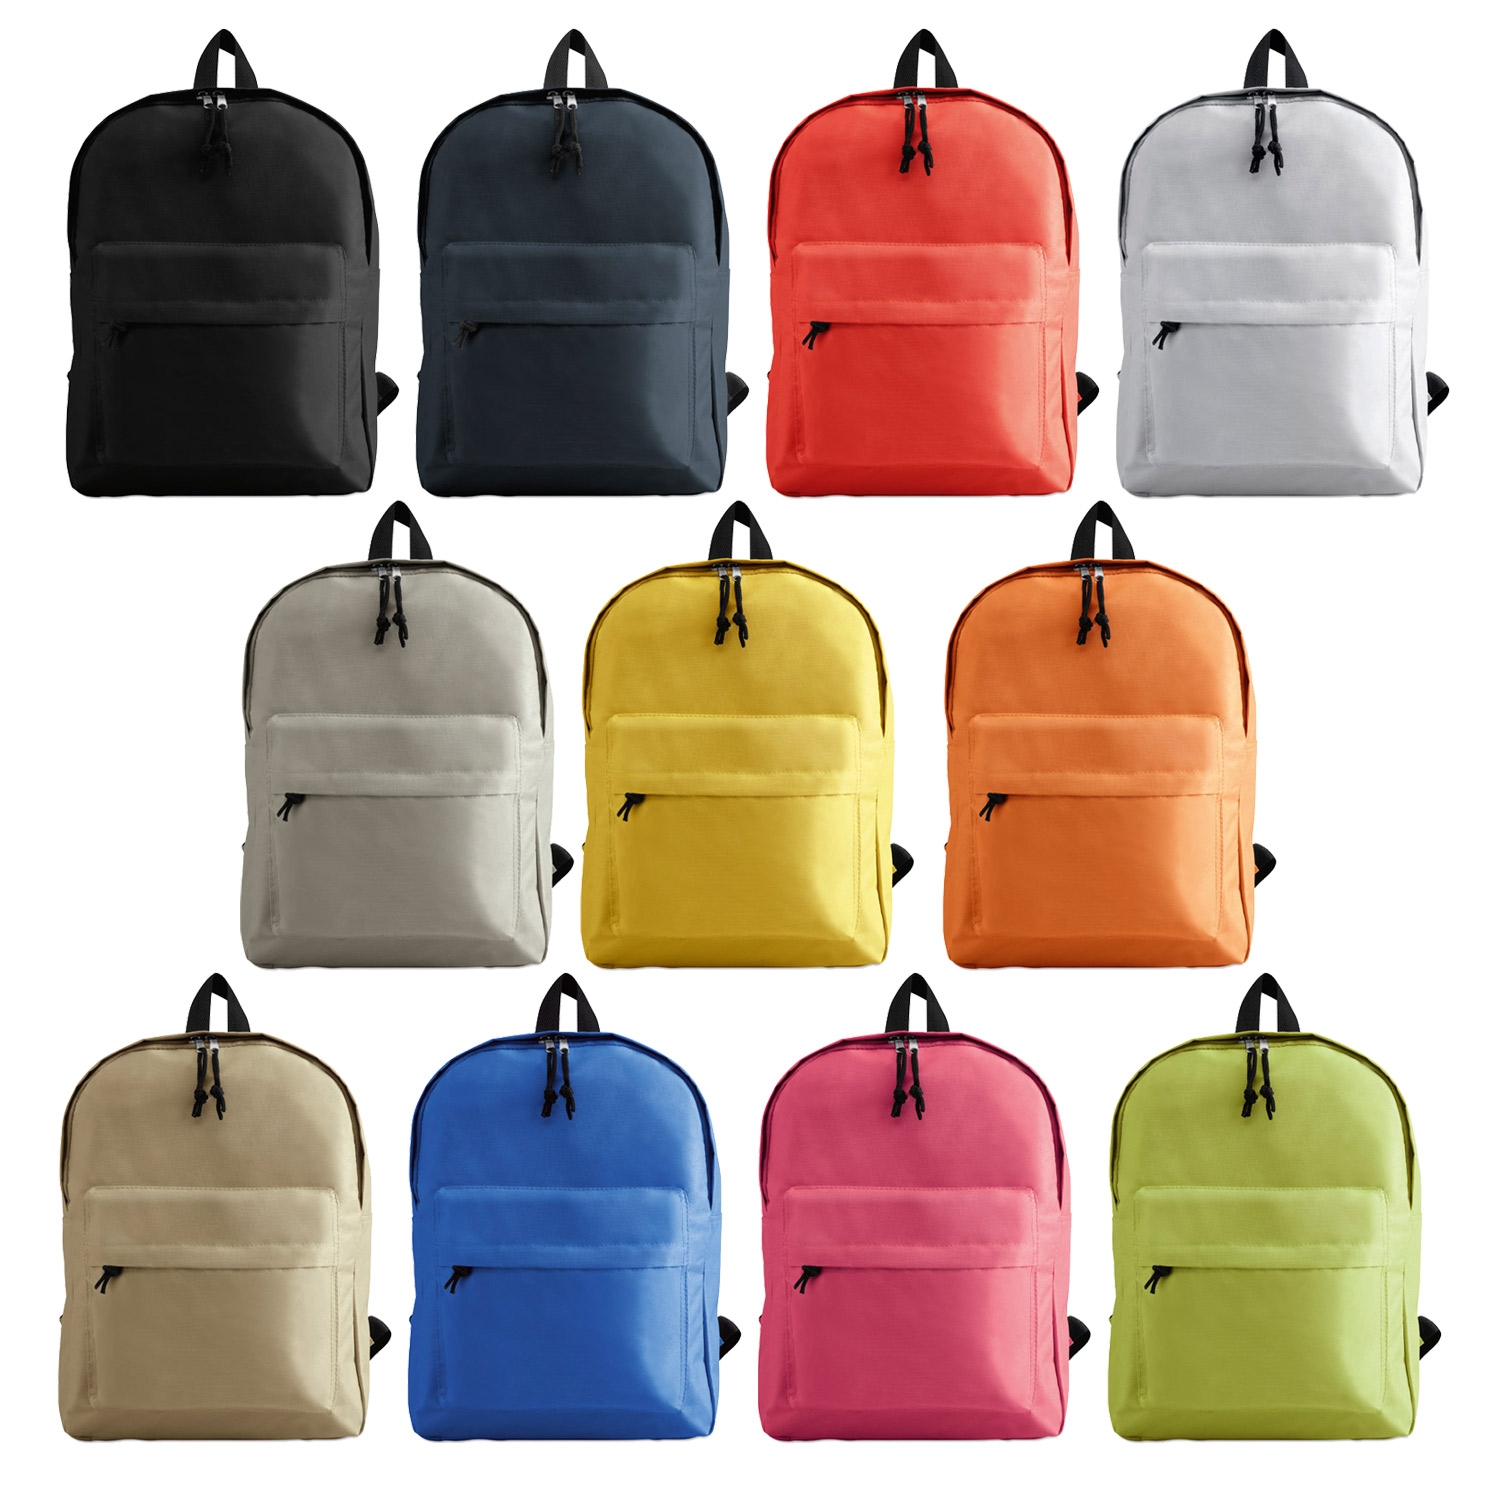 Branded 600D polyester backpack